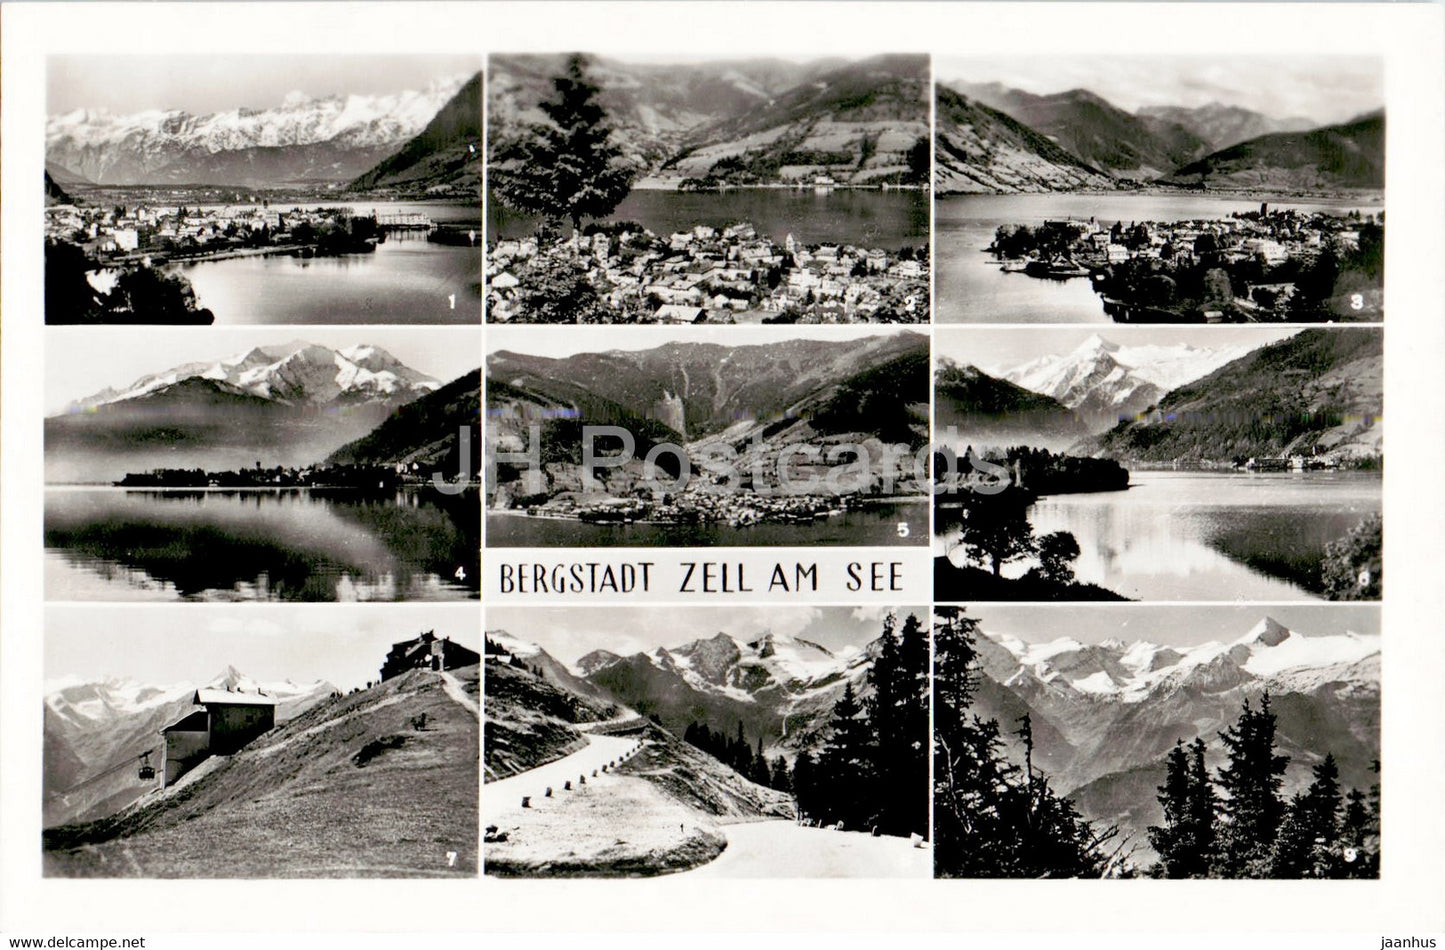 Bergstadt Zell am See - old postcard - Austria - unused - JH Postcards